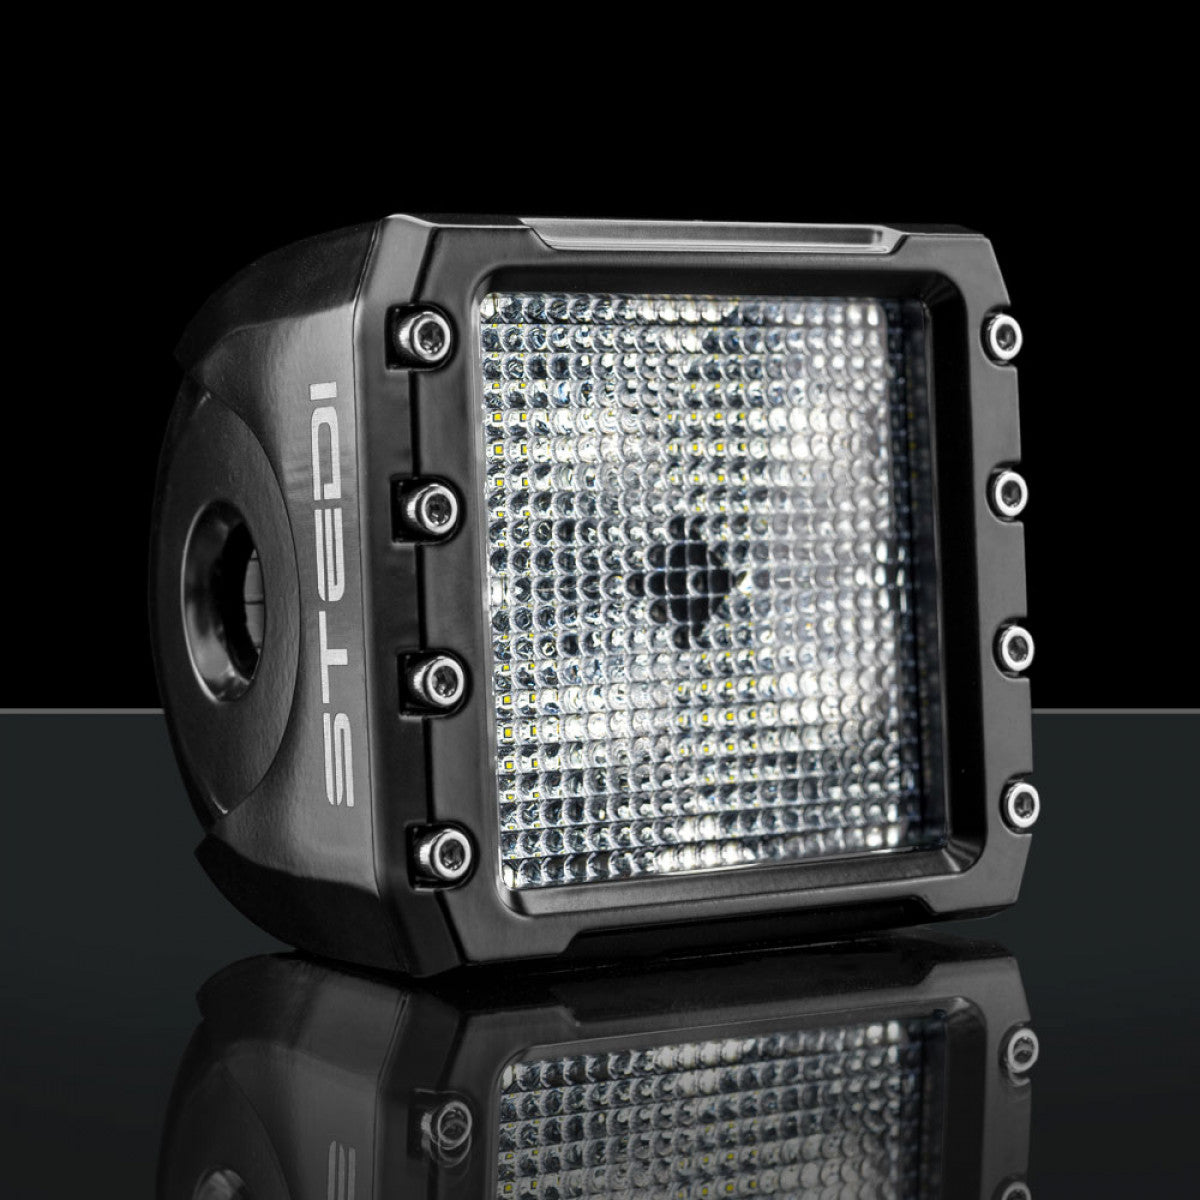 STEDI C-4 Black Edition LED Light Cube (Diffuse)